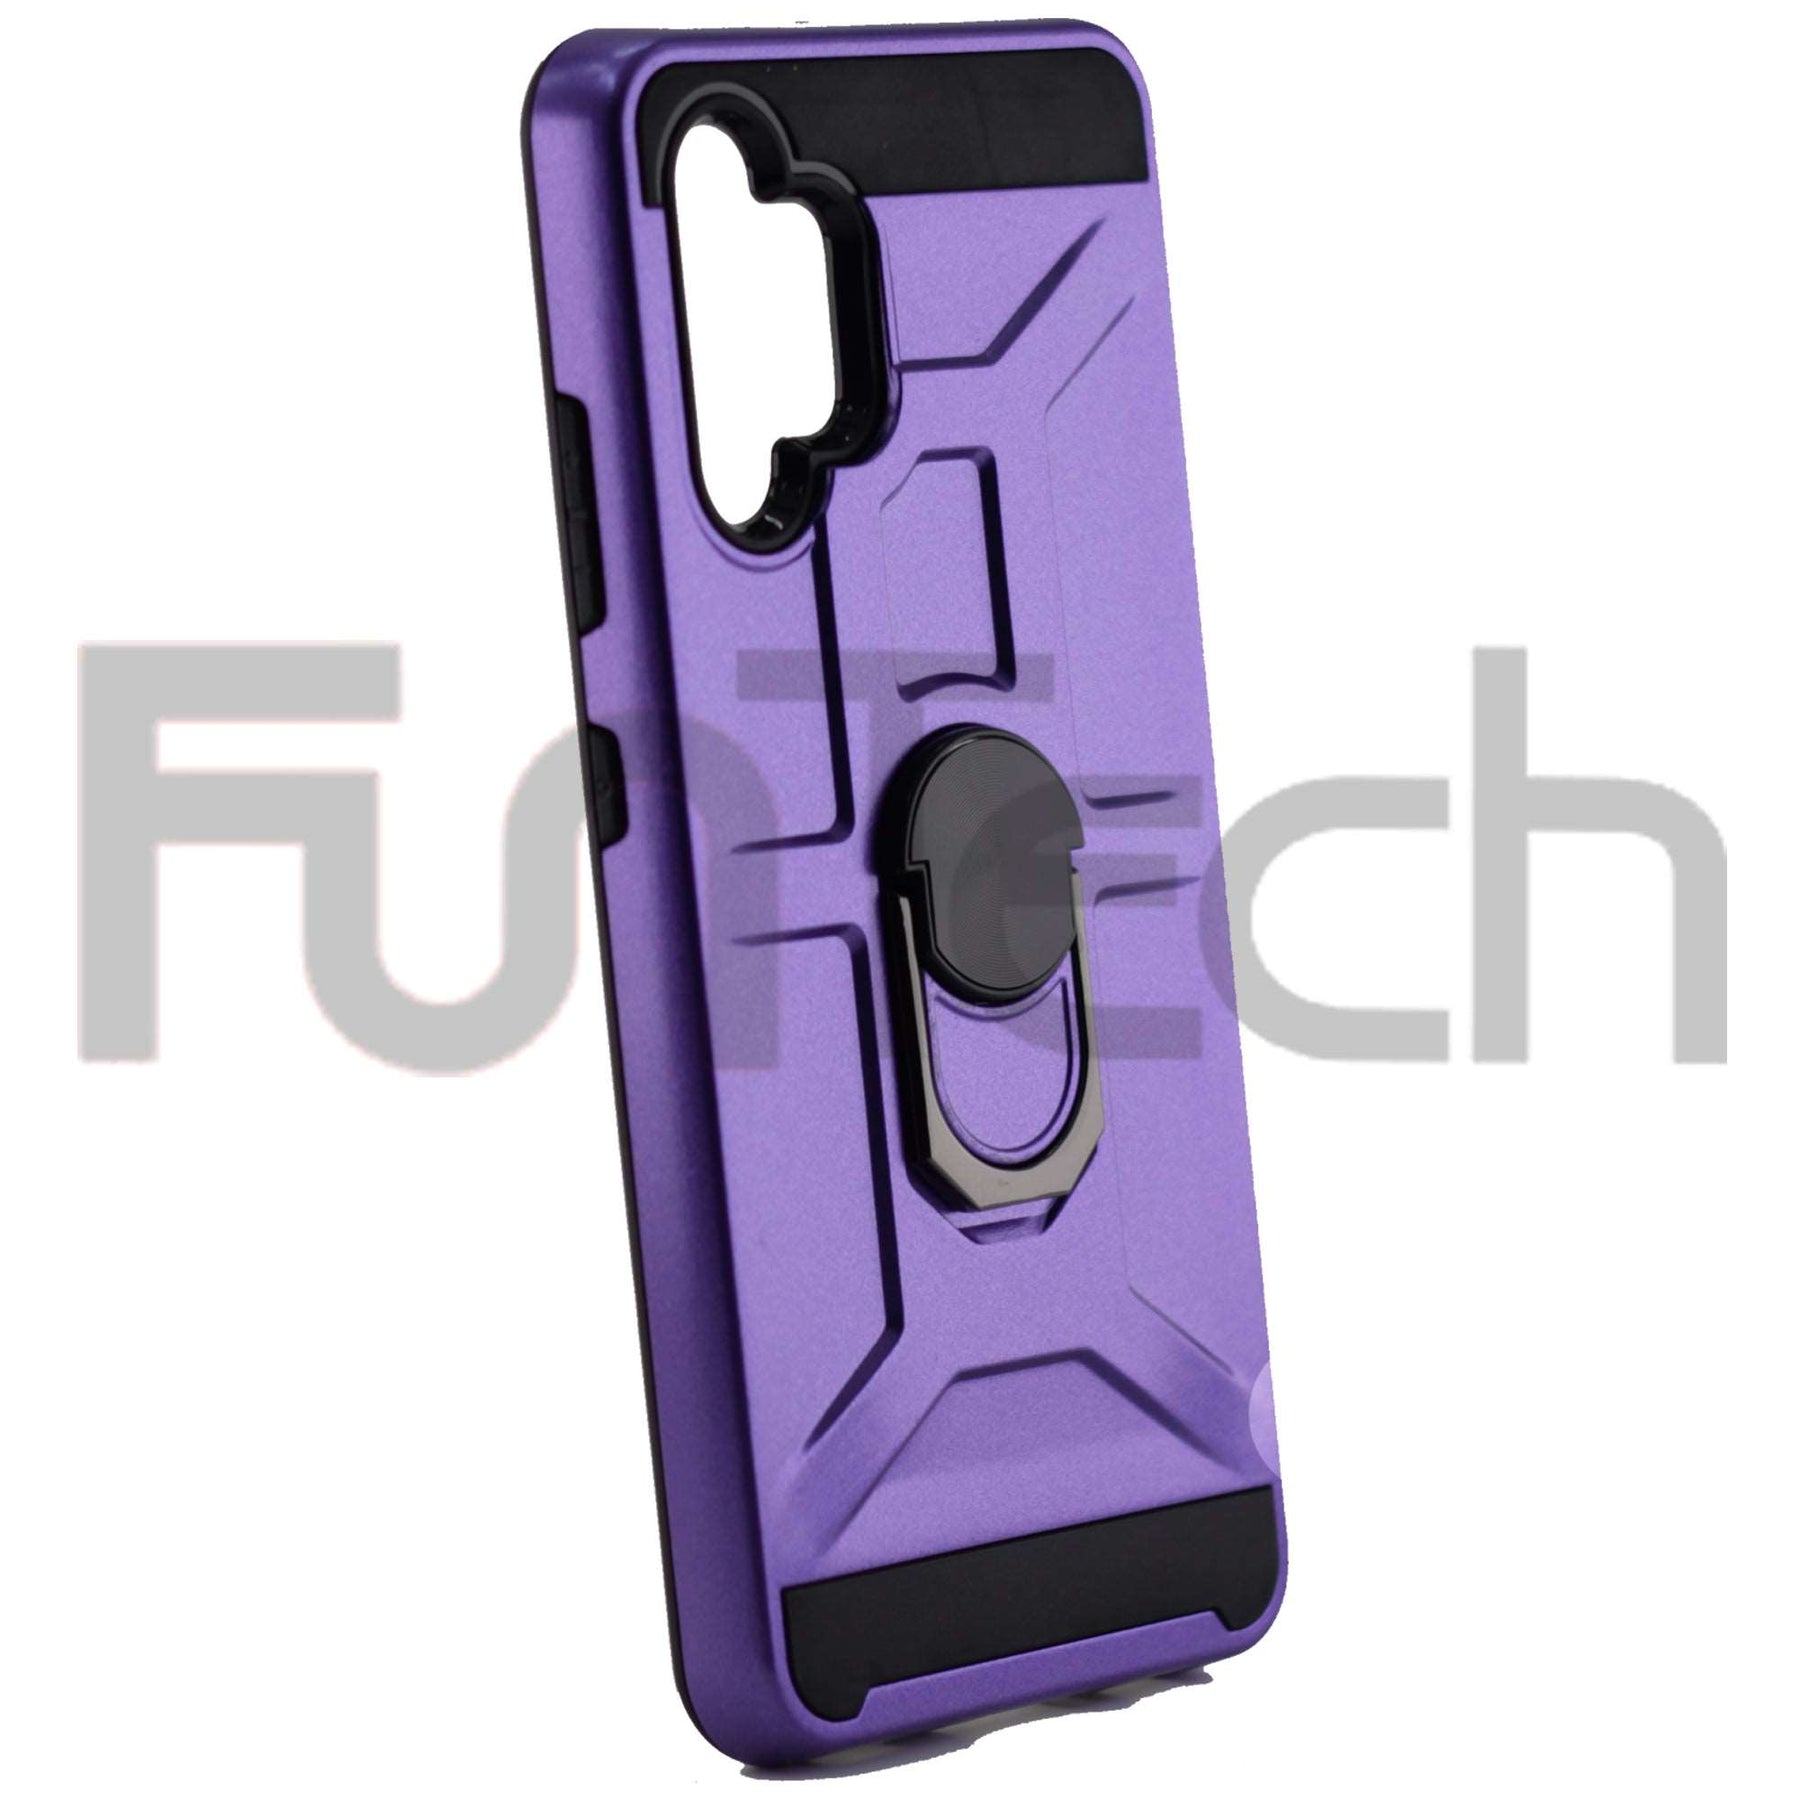 Samsung A32 Case, Color purple.